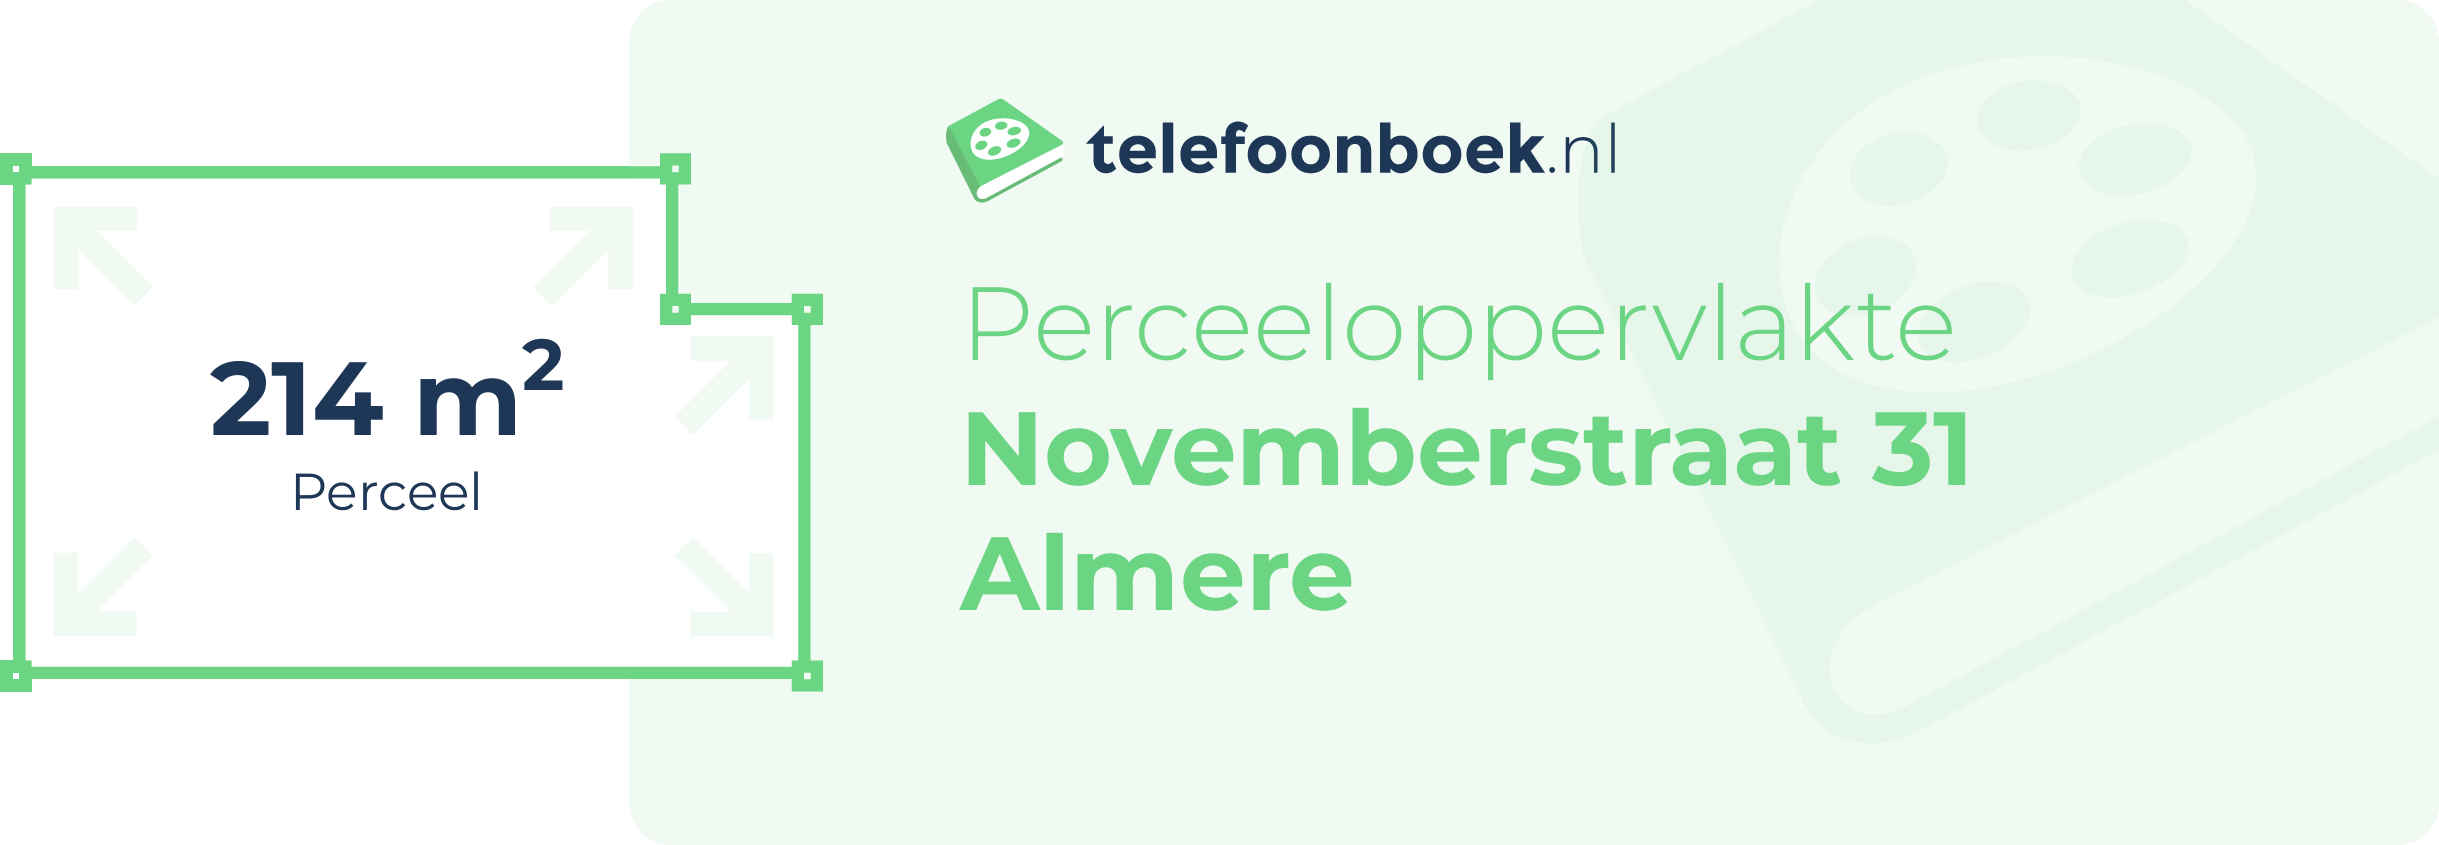 Perceeloppervlakte Novemberstraat 31 Almere